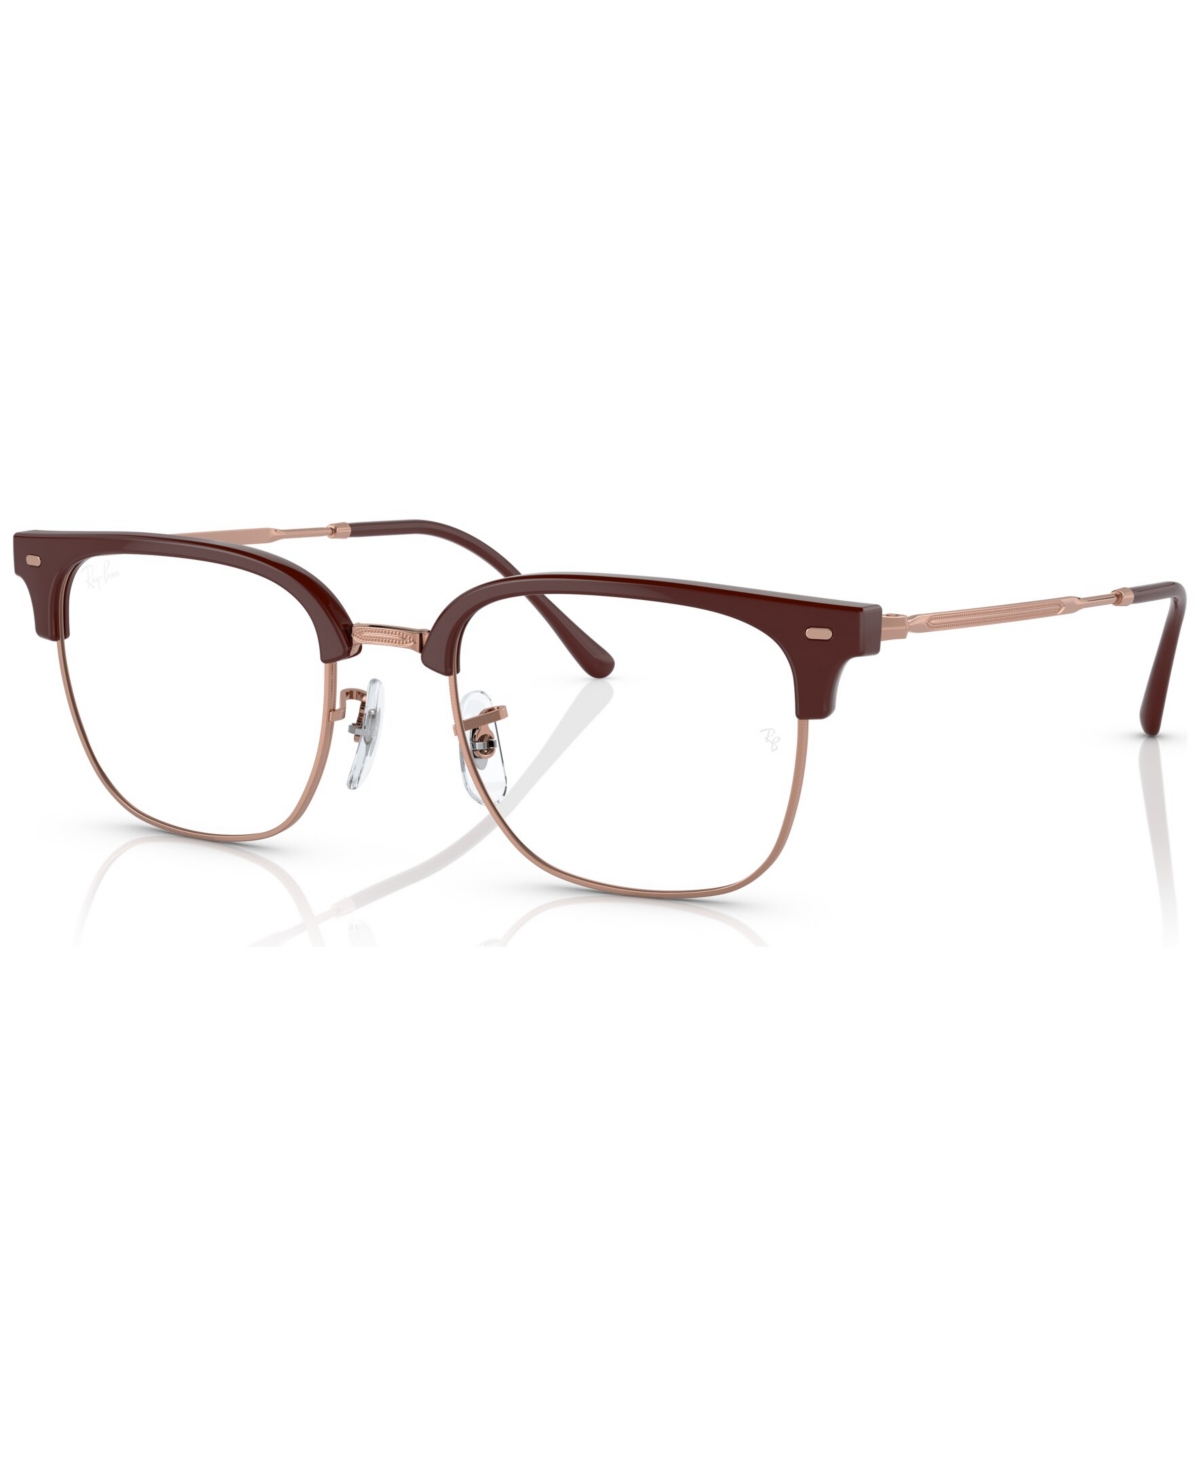 Unisex Square Eyeglasses, RX721651-o - Bordeaux On Rose Gold-Tone